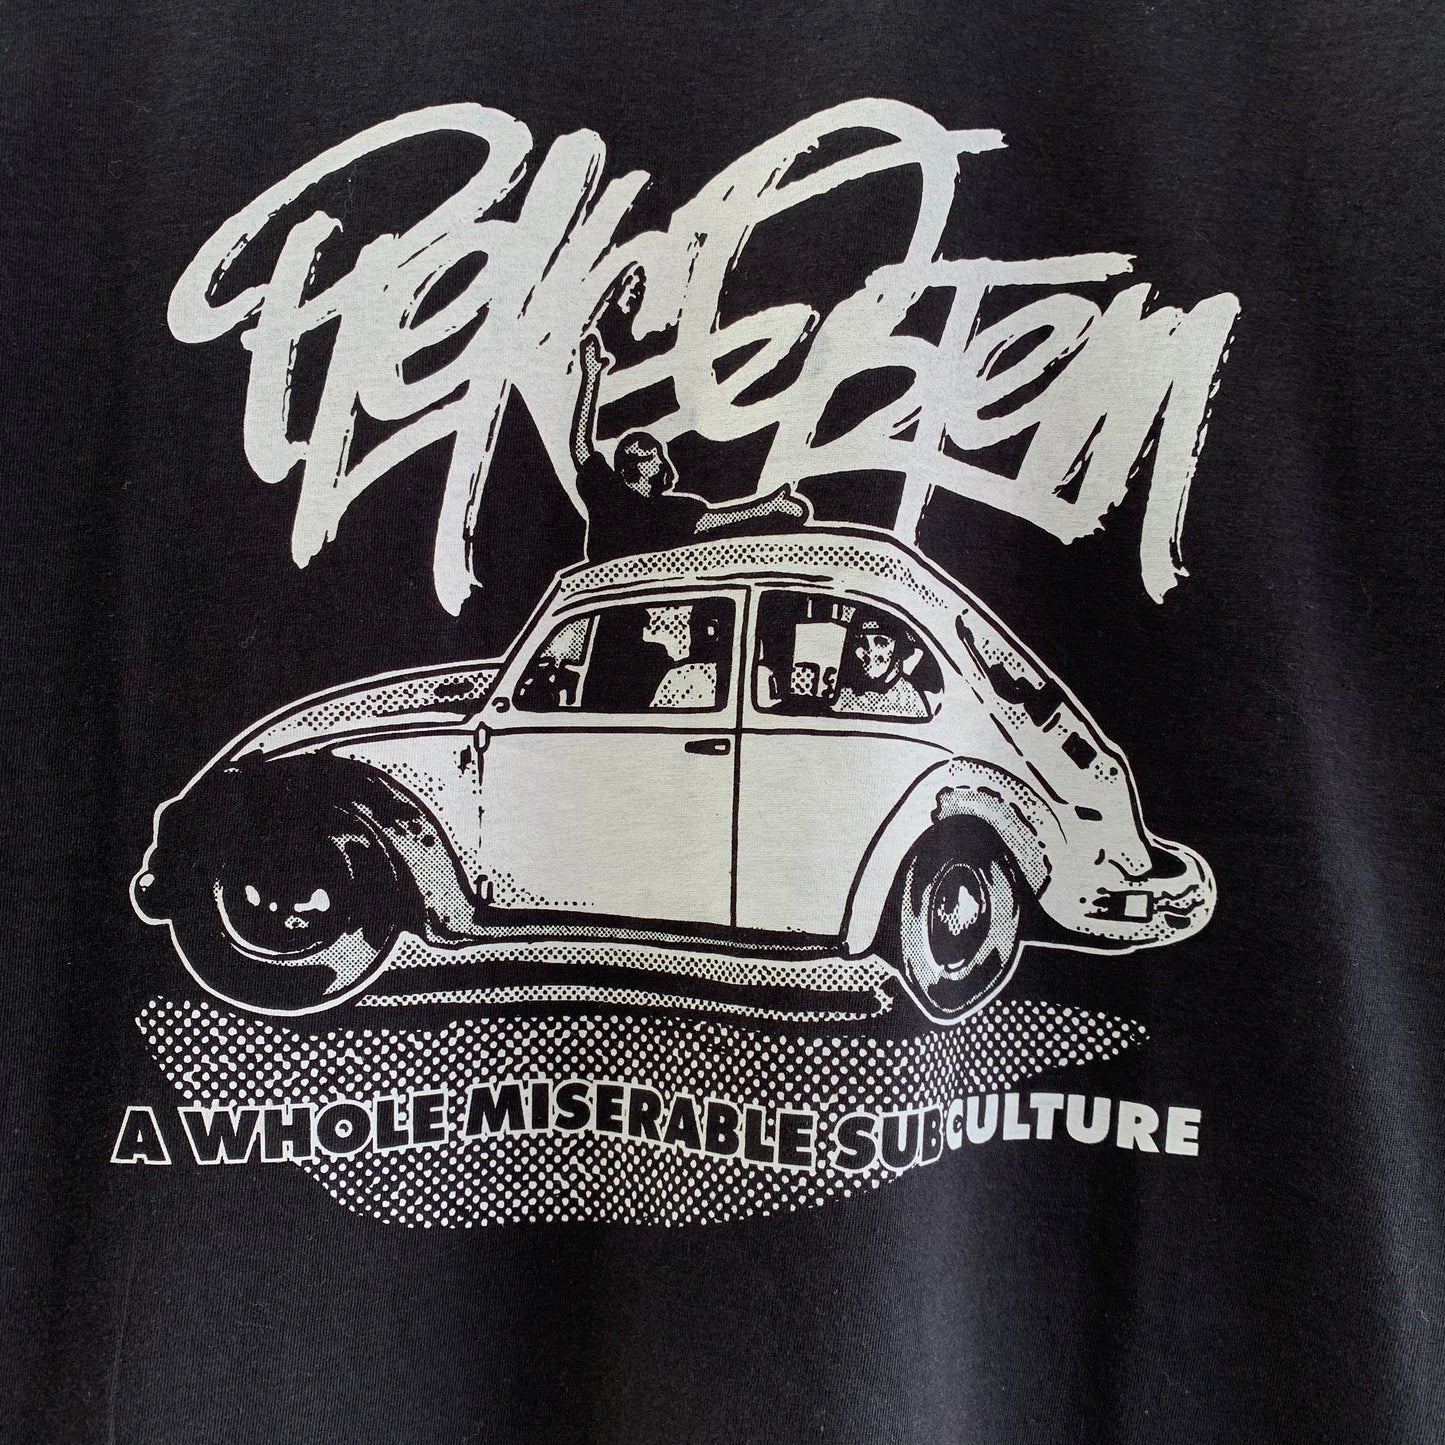 A Whole Miserable Subculture T-shirt